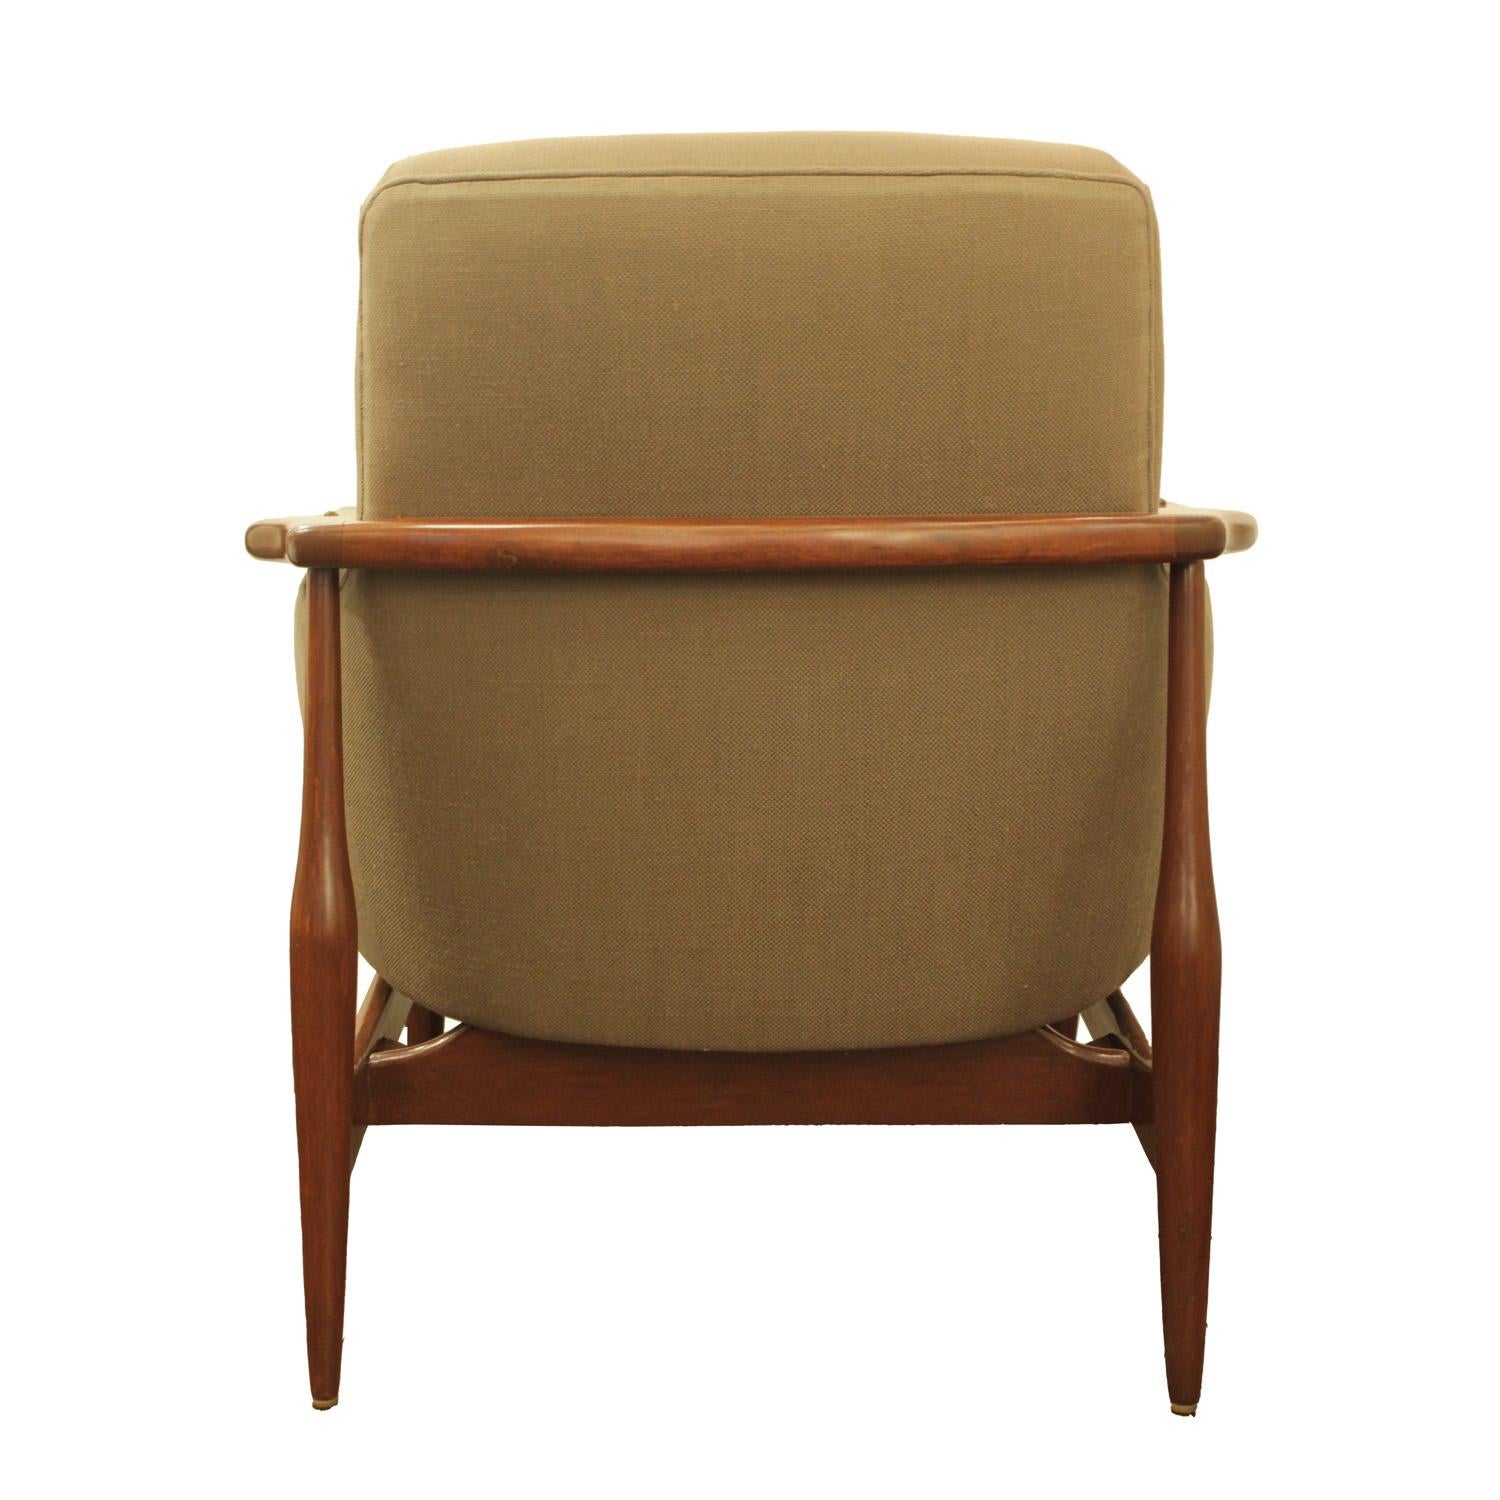 Late 20th Century Finn Juhl Inspired Pair of Danish Mid-Century Lounge Chairs 1970s